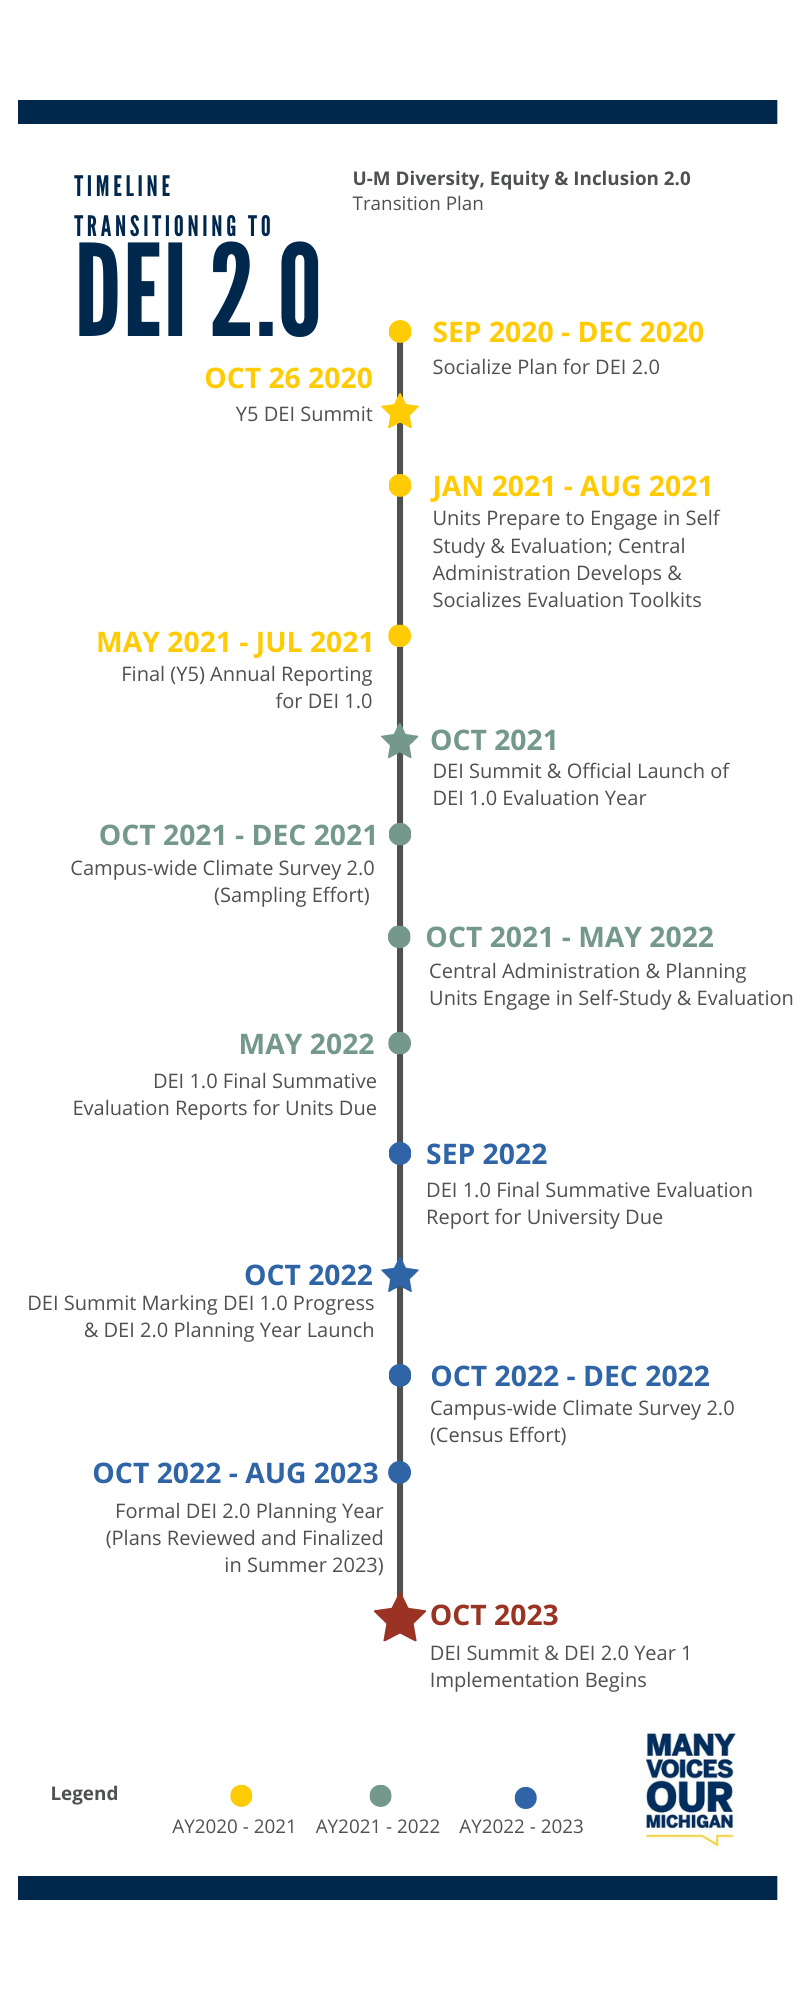 Timeline of DEI 2.0 Planning